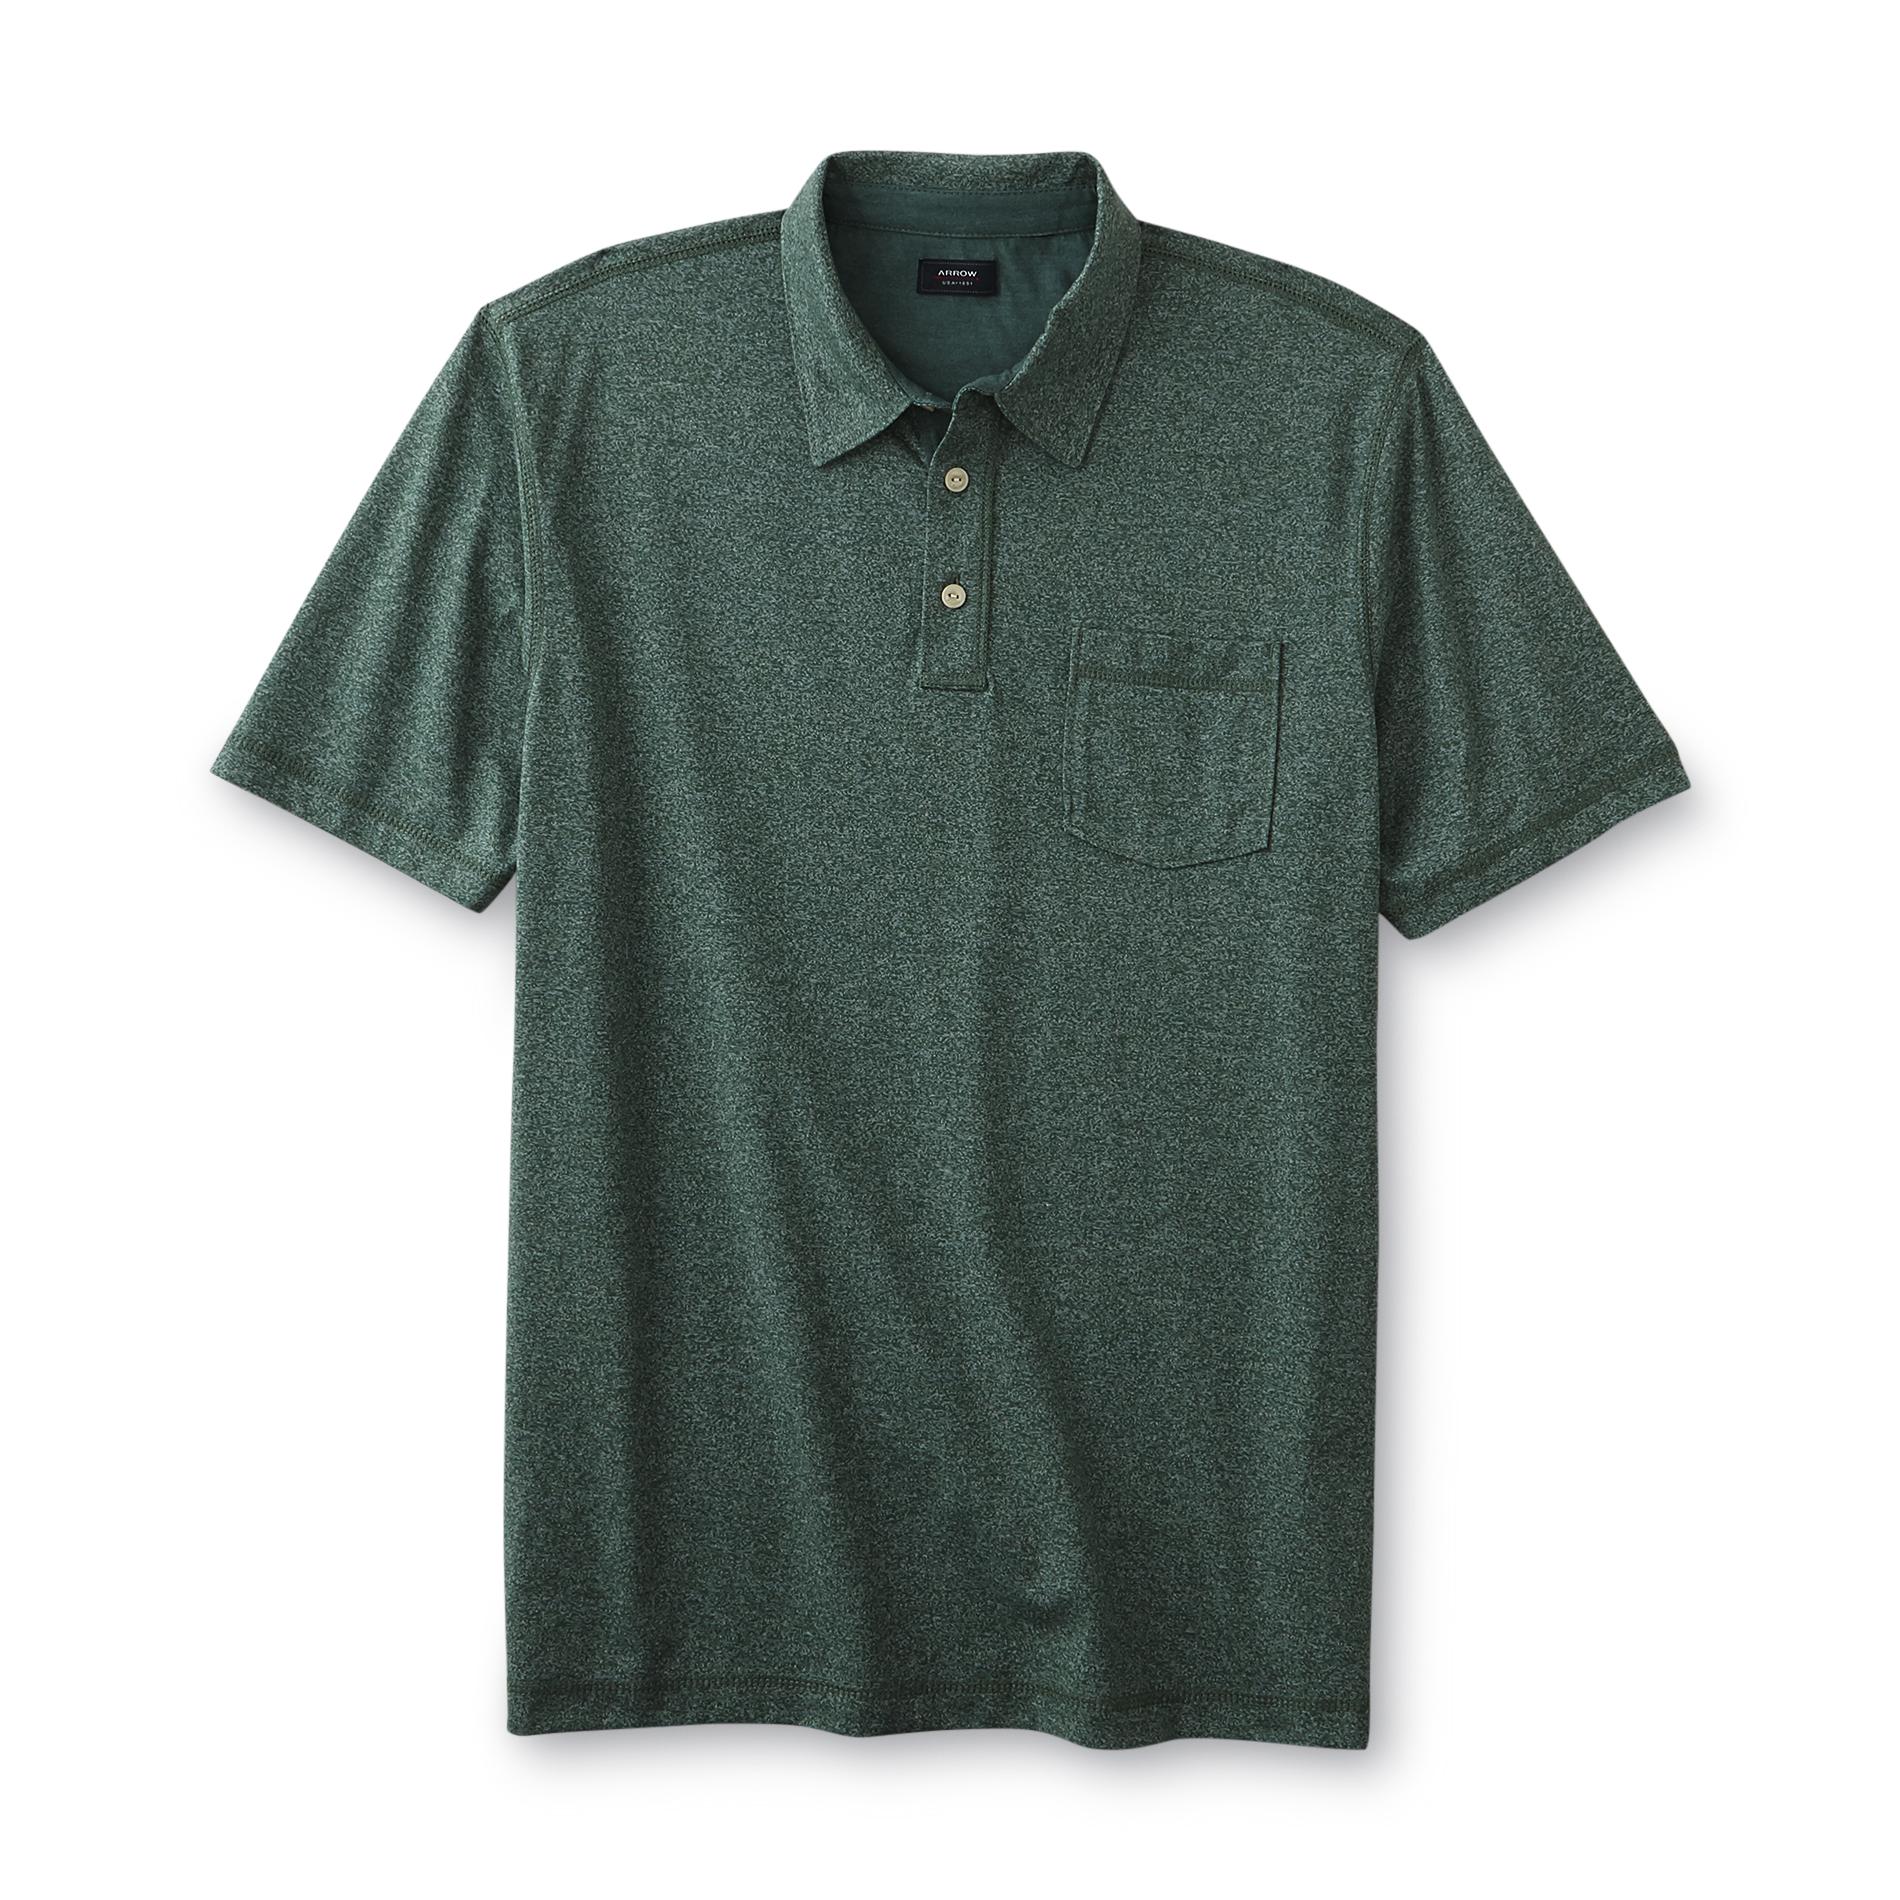 Arrow Men's Polo Shirt - Sears